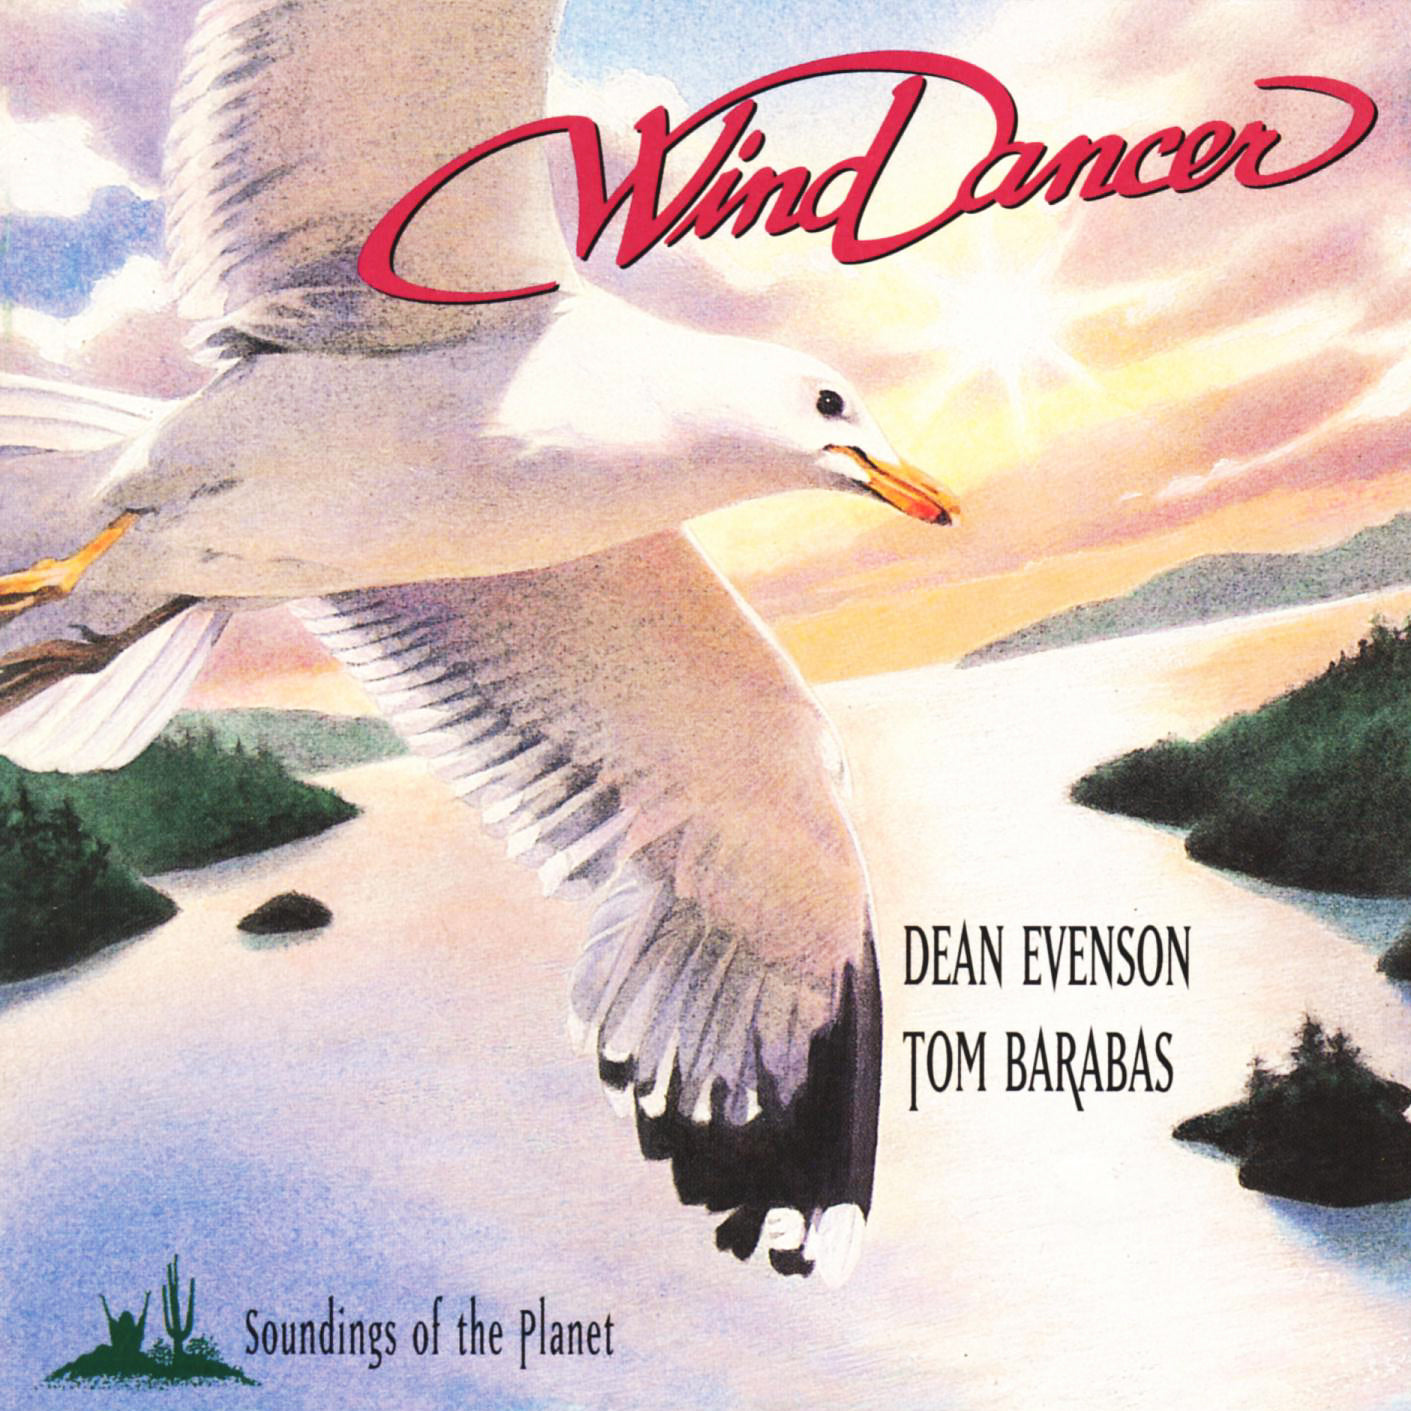 winddancer. Dean Evenson Tom Barabas